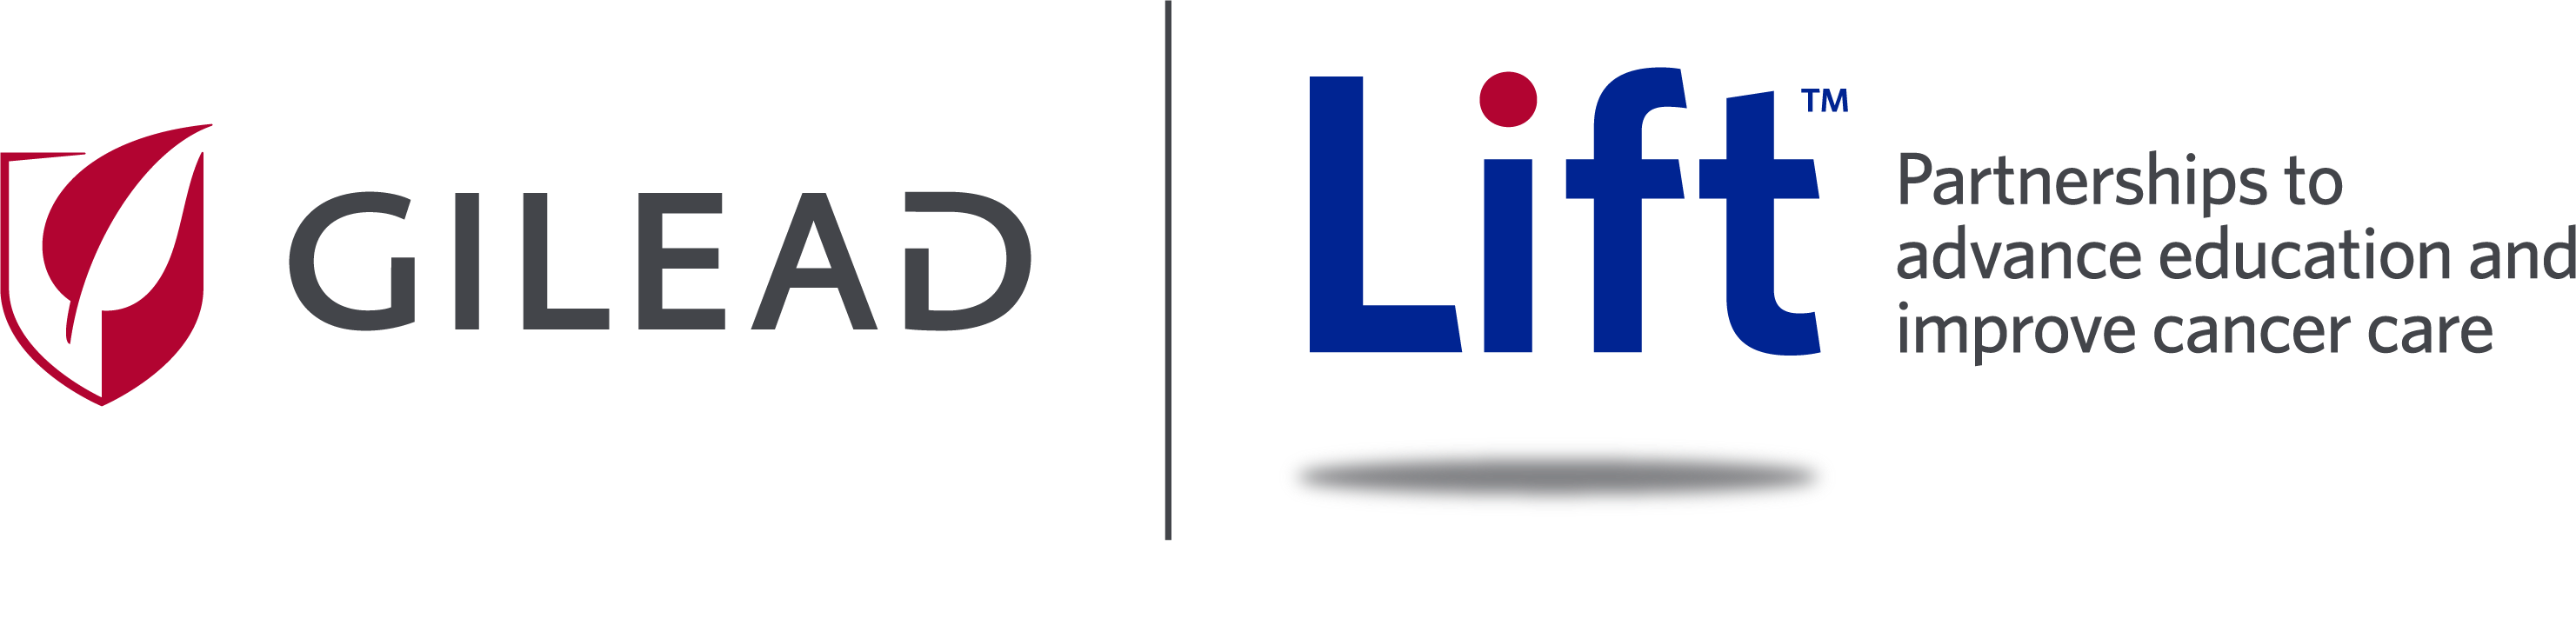 Gilead and Lift partnership logo